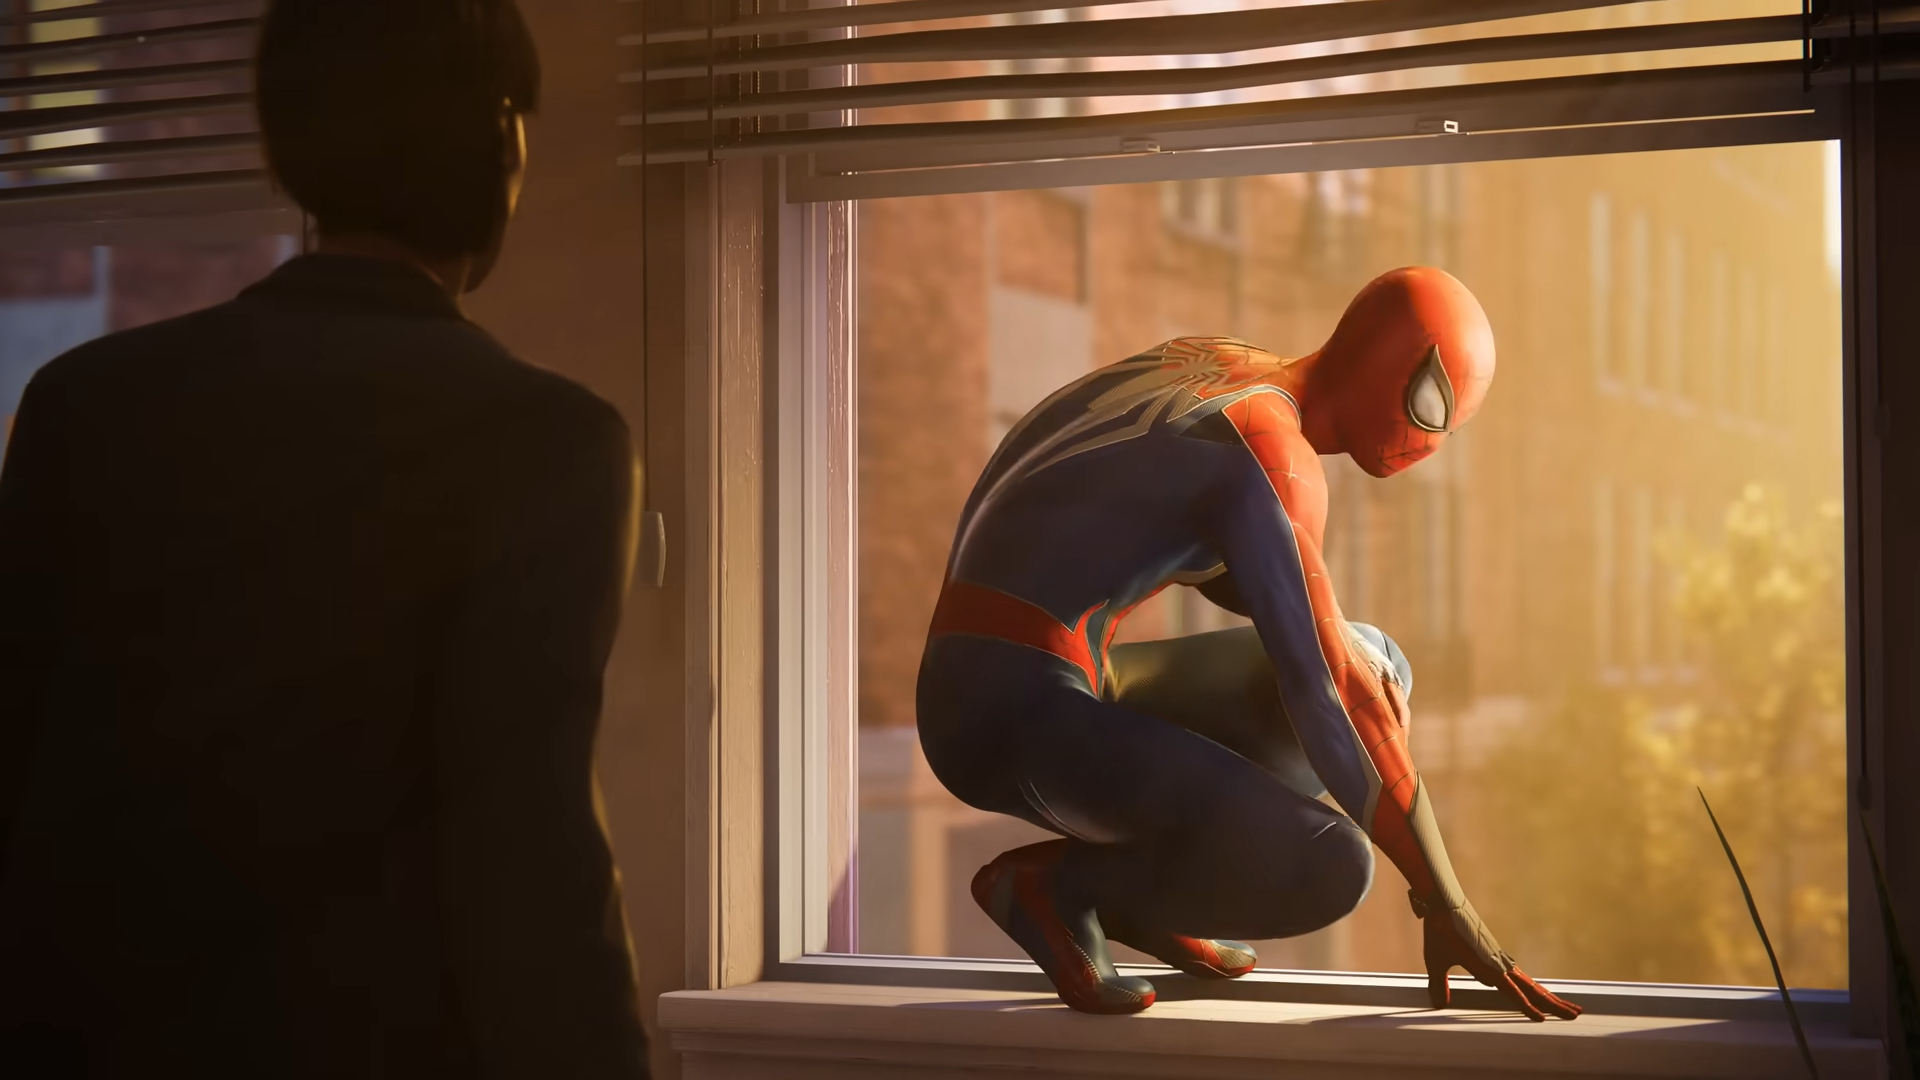 Marvel's Spider-Man 2 September release date leaked